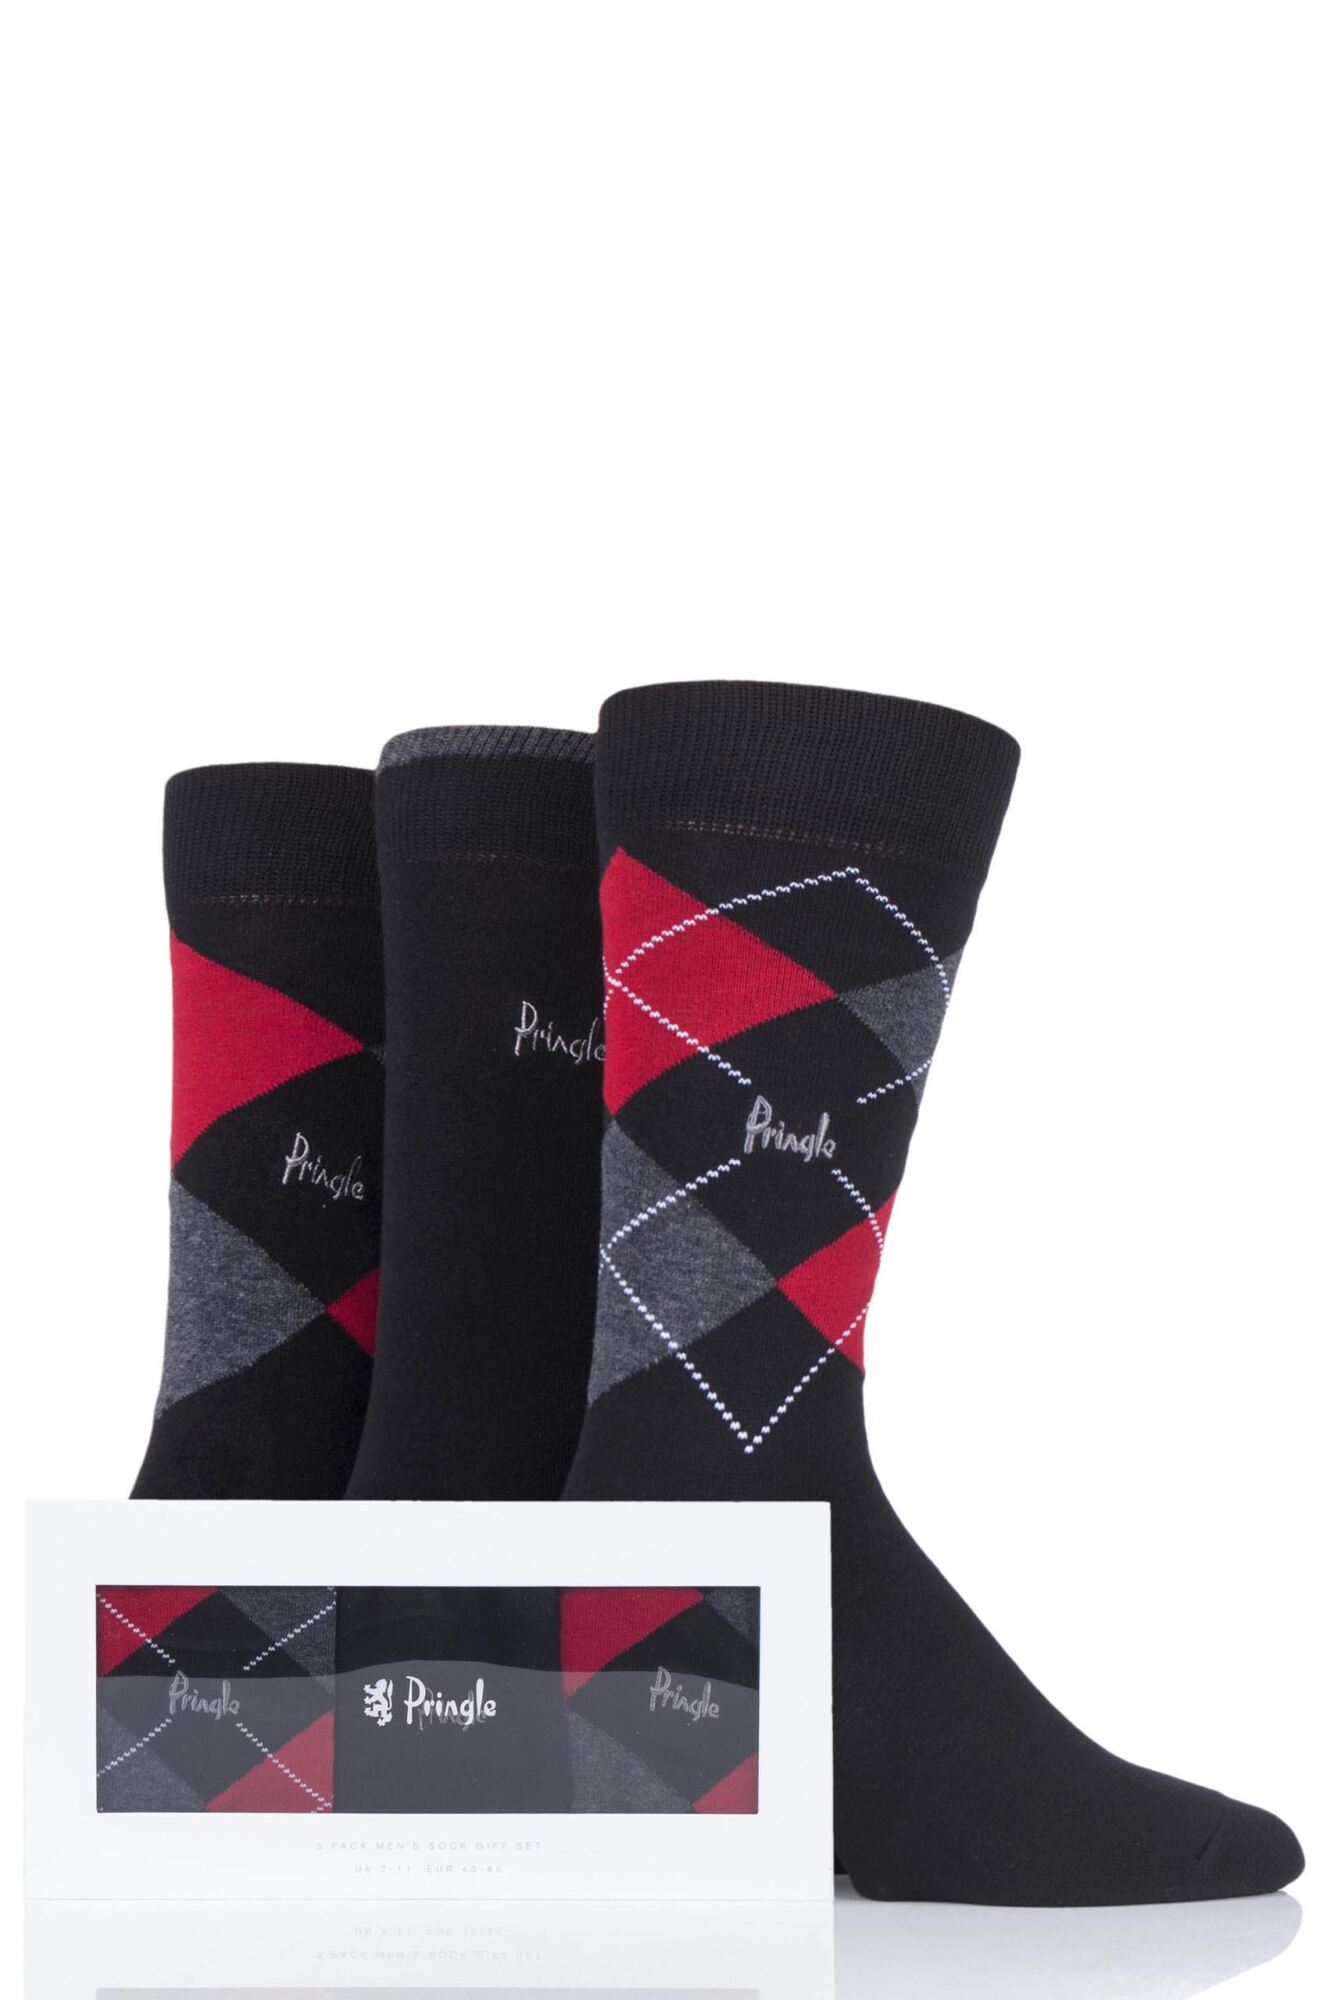 3 Pair Argyle and Plain Gift Boxed Cotton Socks Men's - Pringle